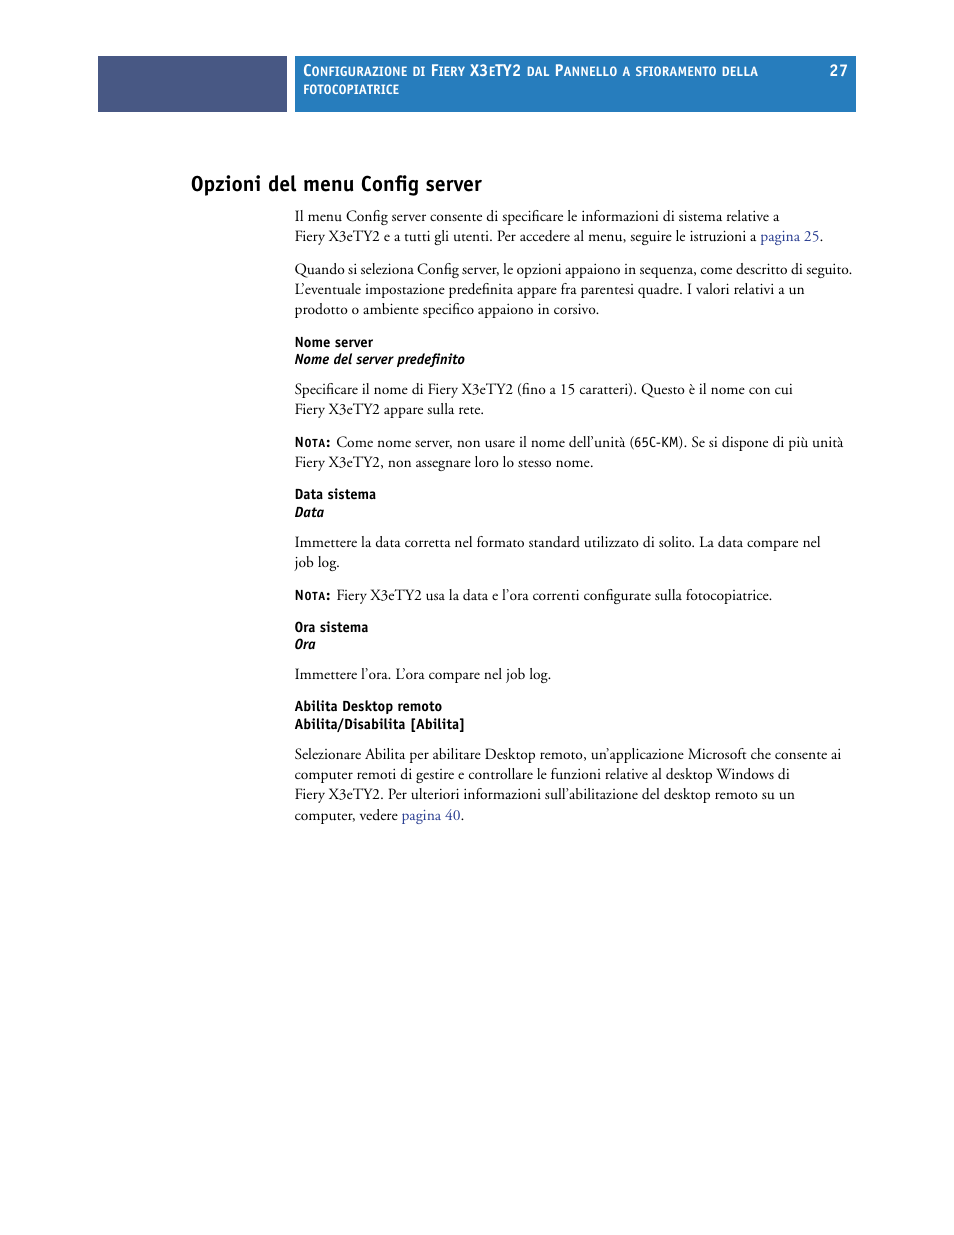 Opzioni del menu config server | Konica Minolta bizhub PRO C6500P Manuale d'uso | Pagina 27 / 54